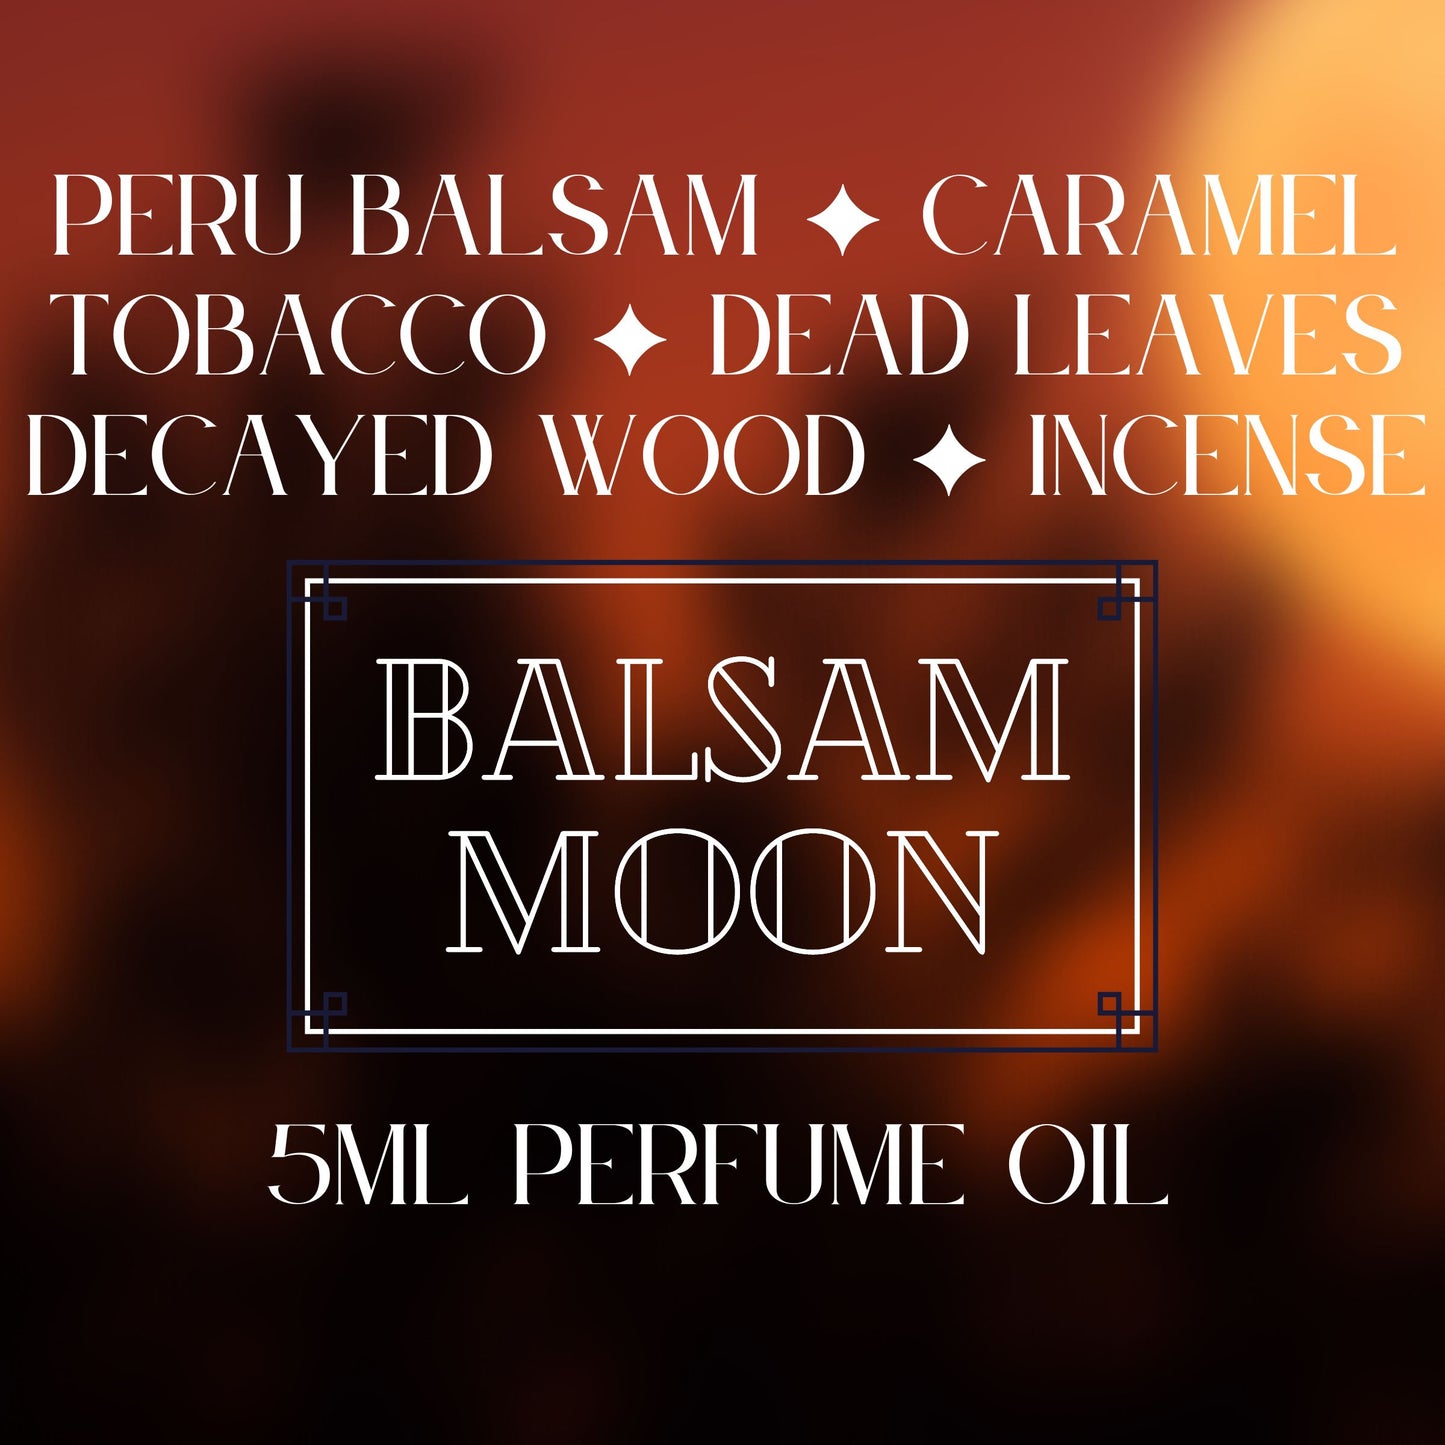 BALSAM MOON perfume oil